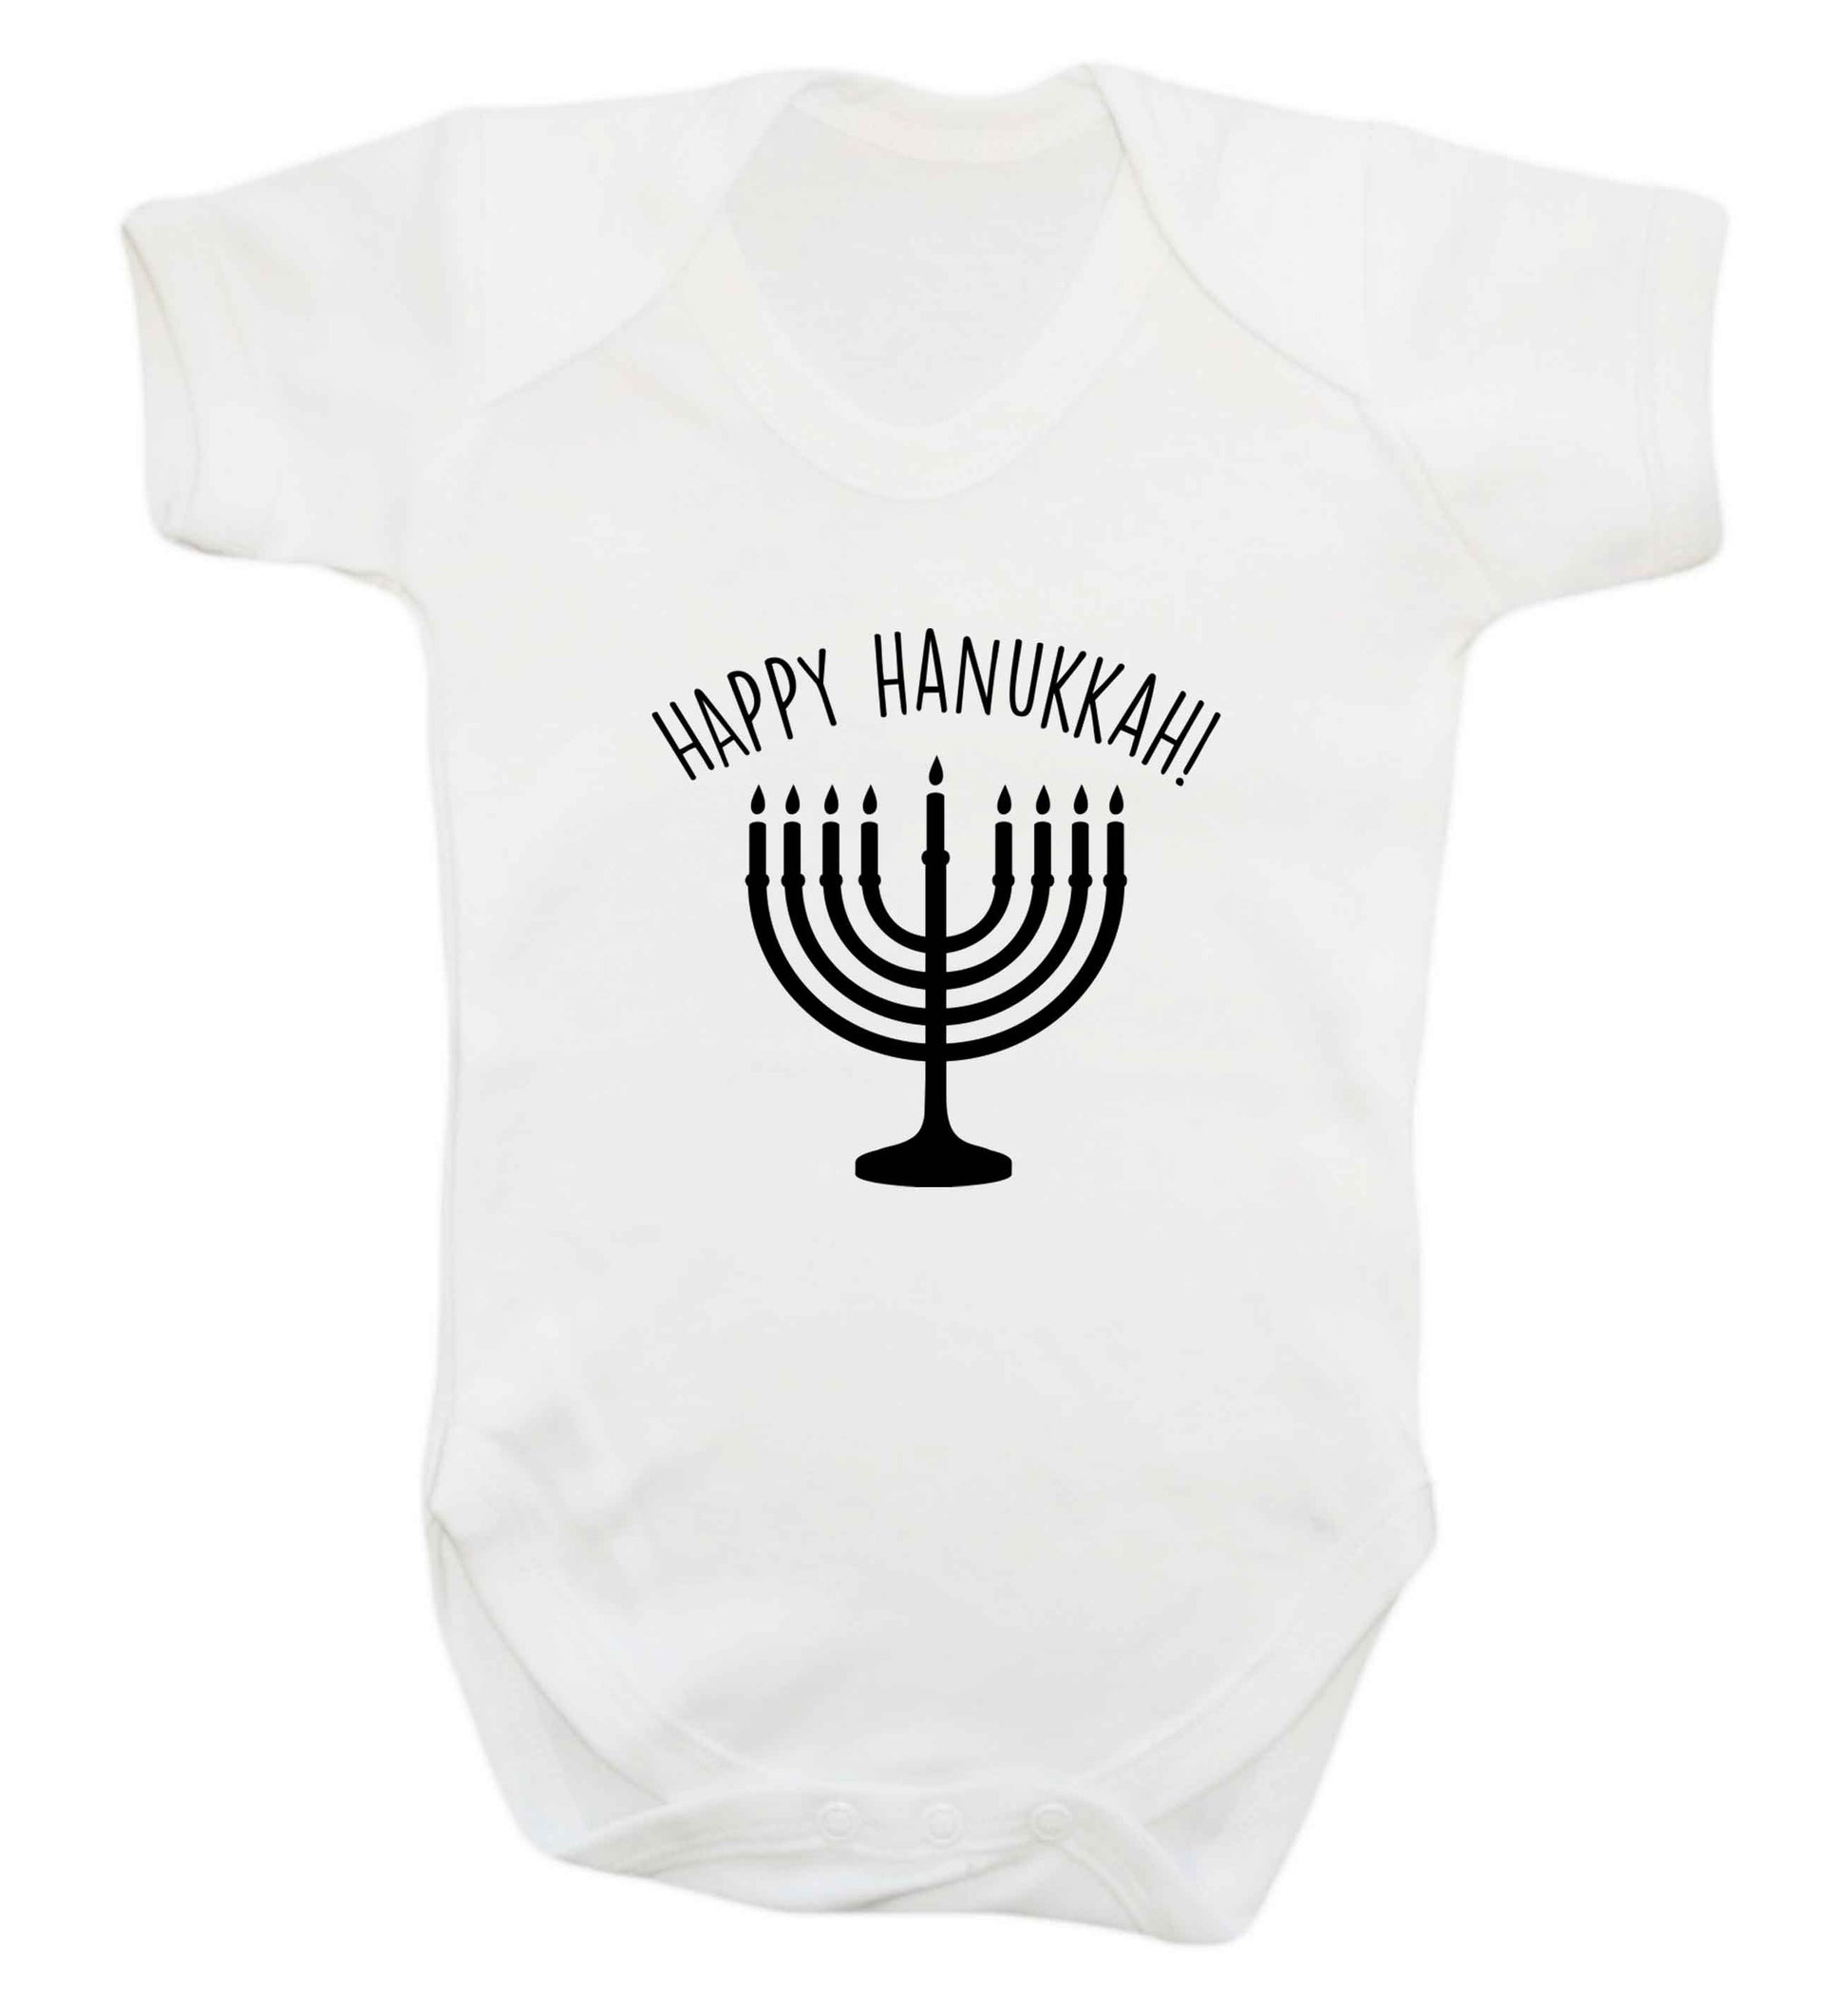 Happy hanukkah baby vest white 18-24 months